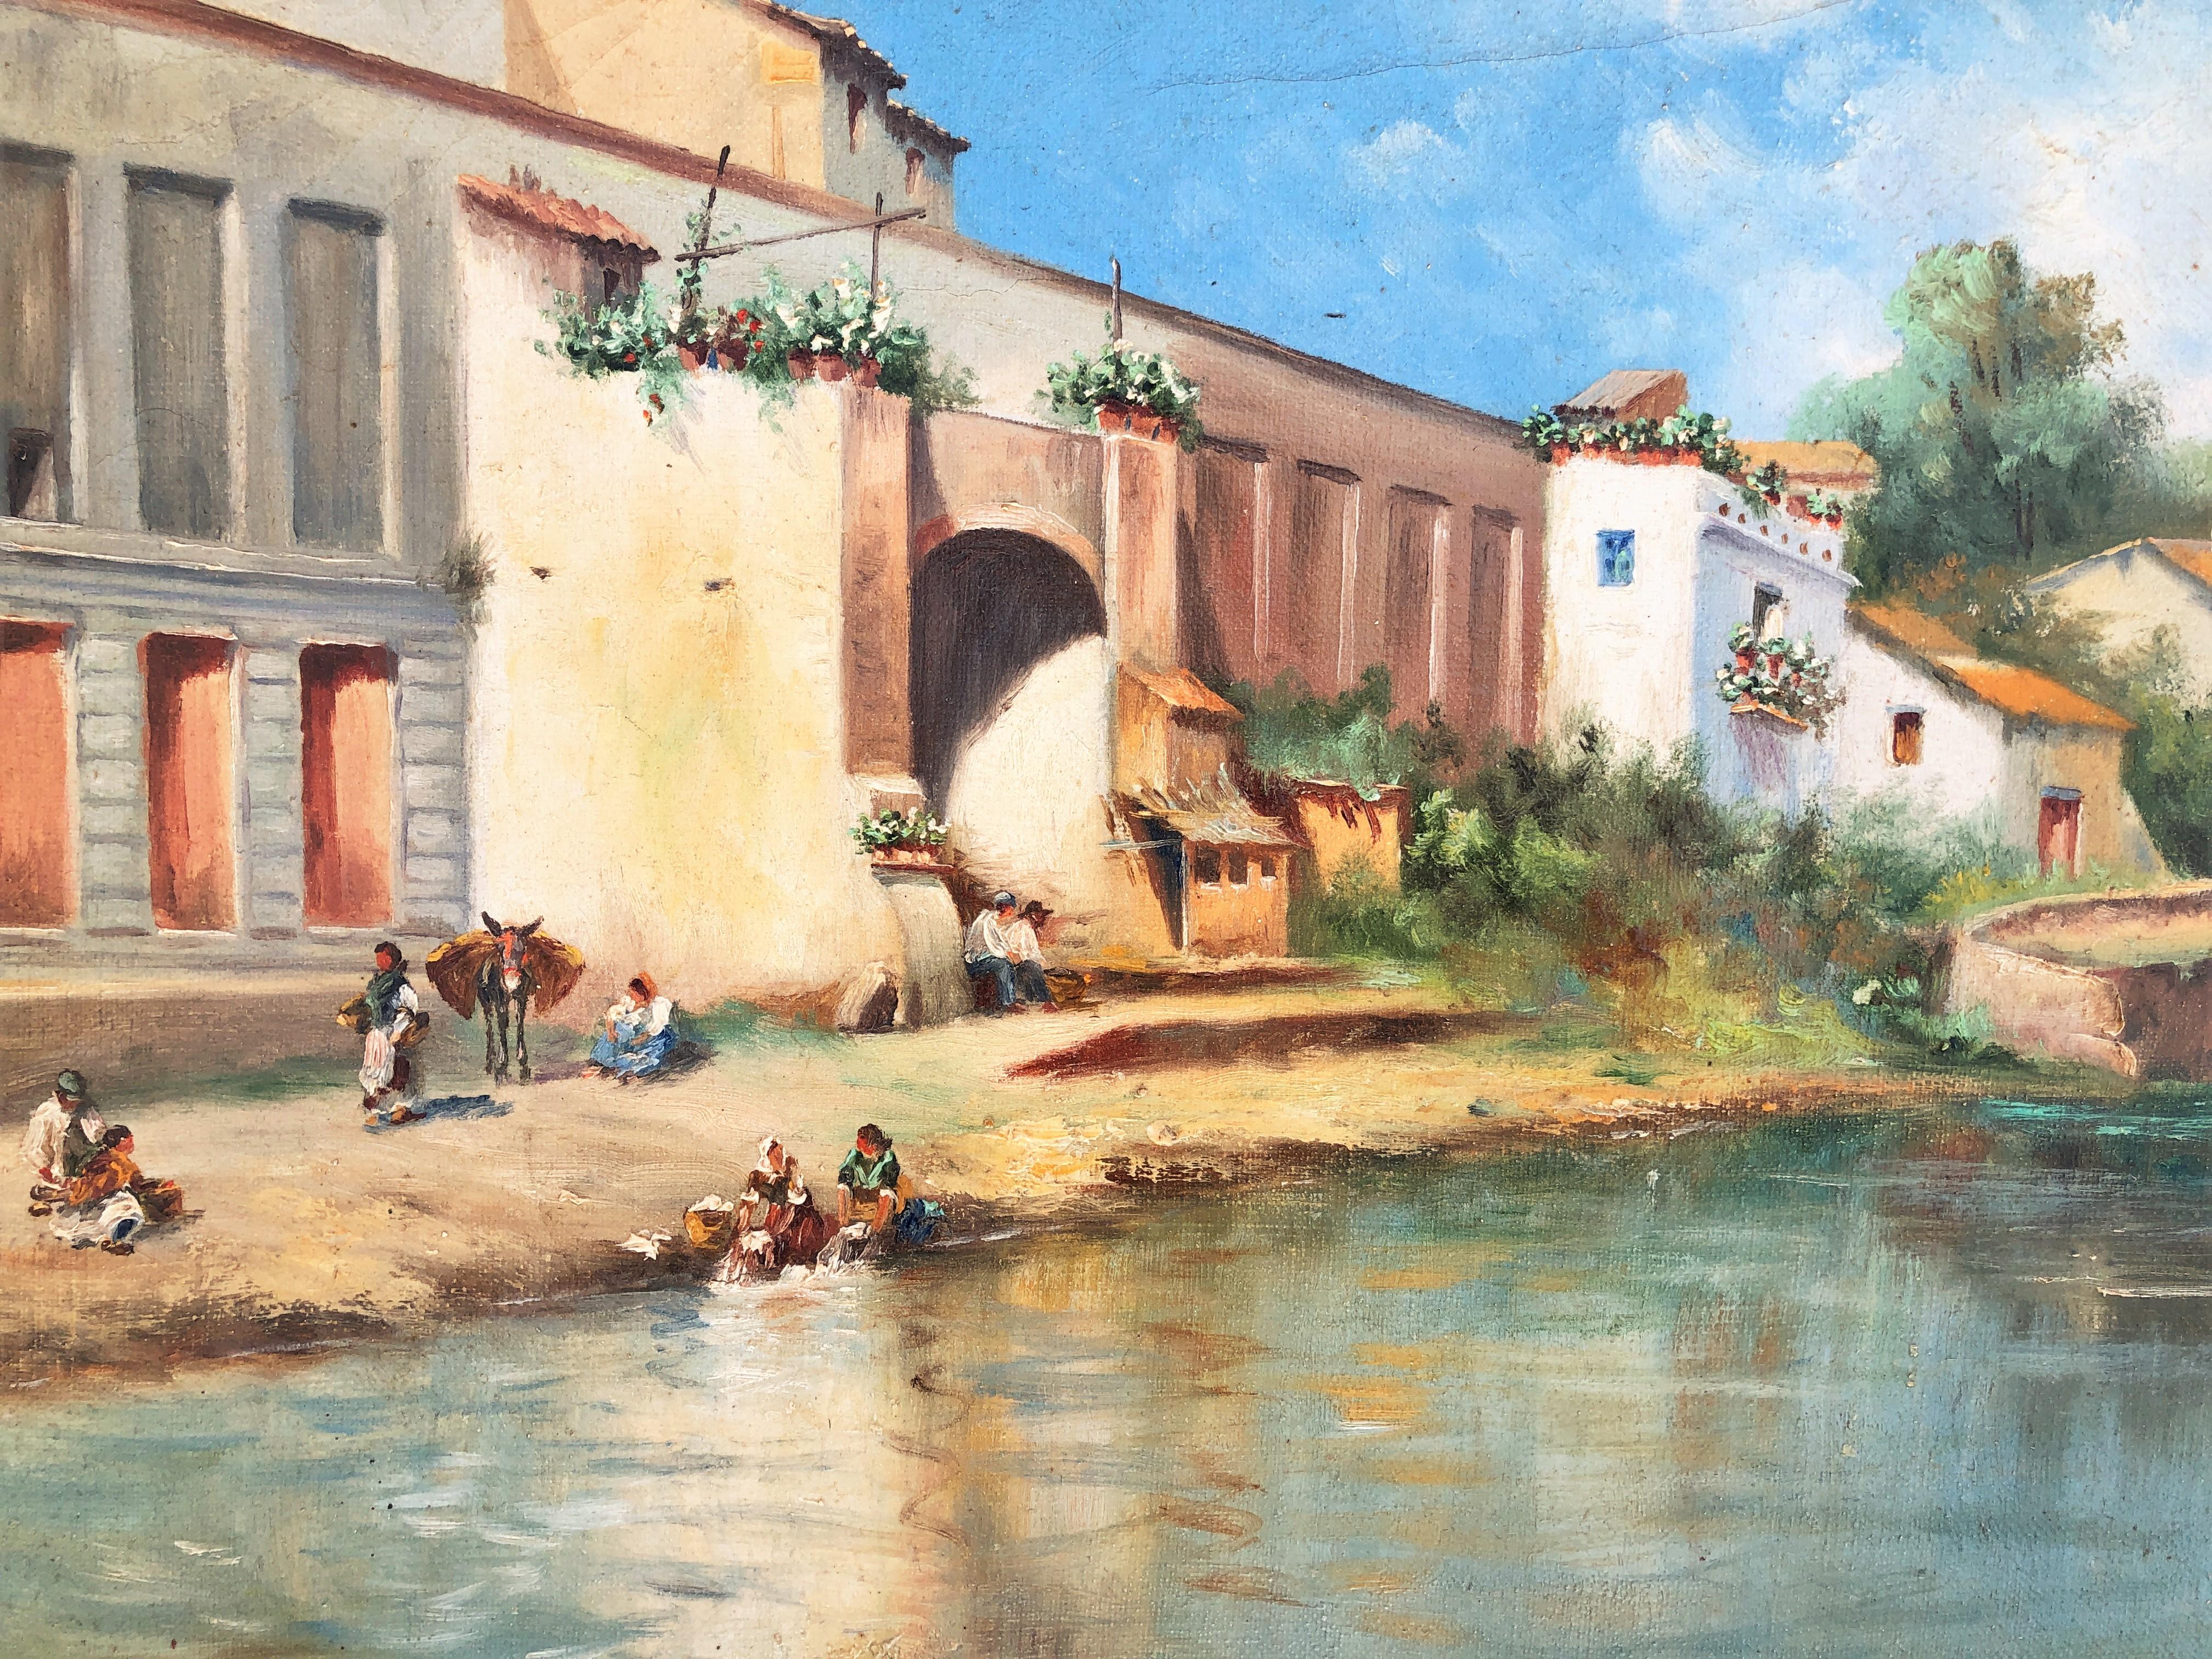 Seville Guadalquivir River Spain oil on canvas painting For Sale 1